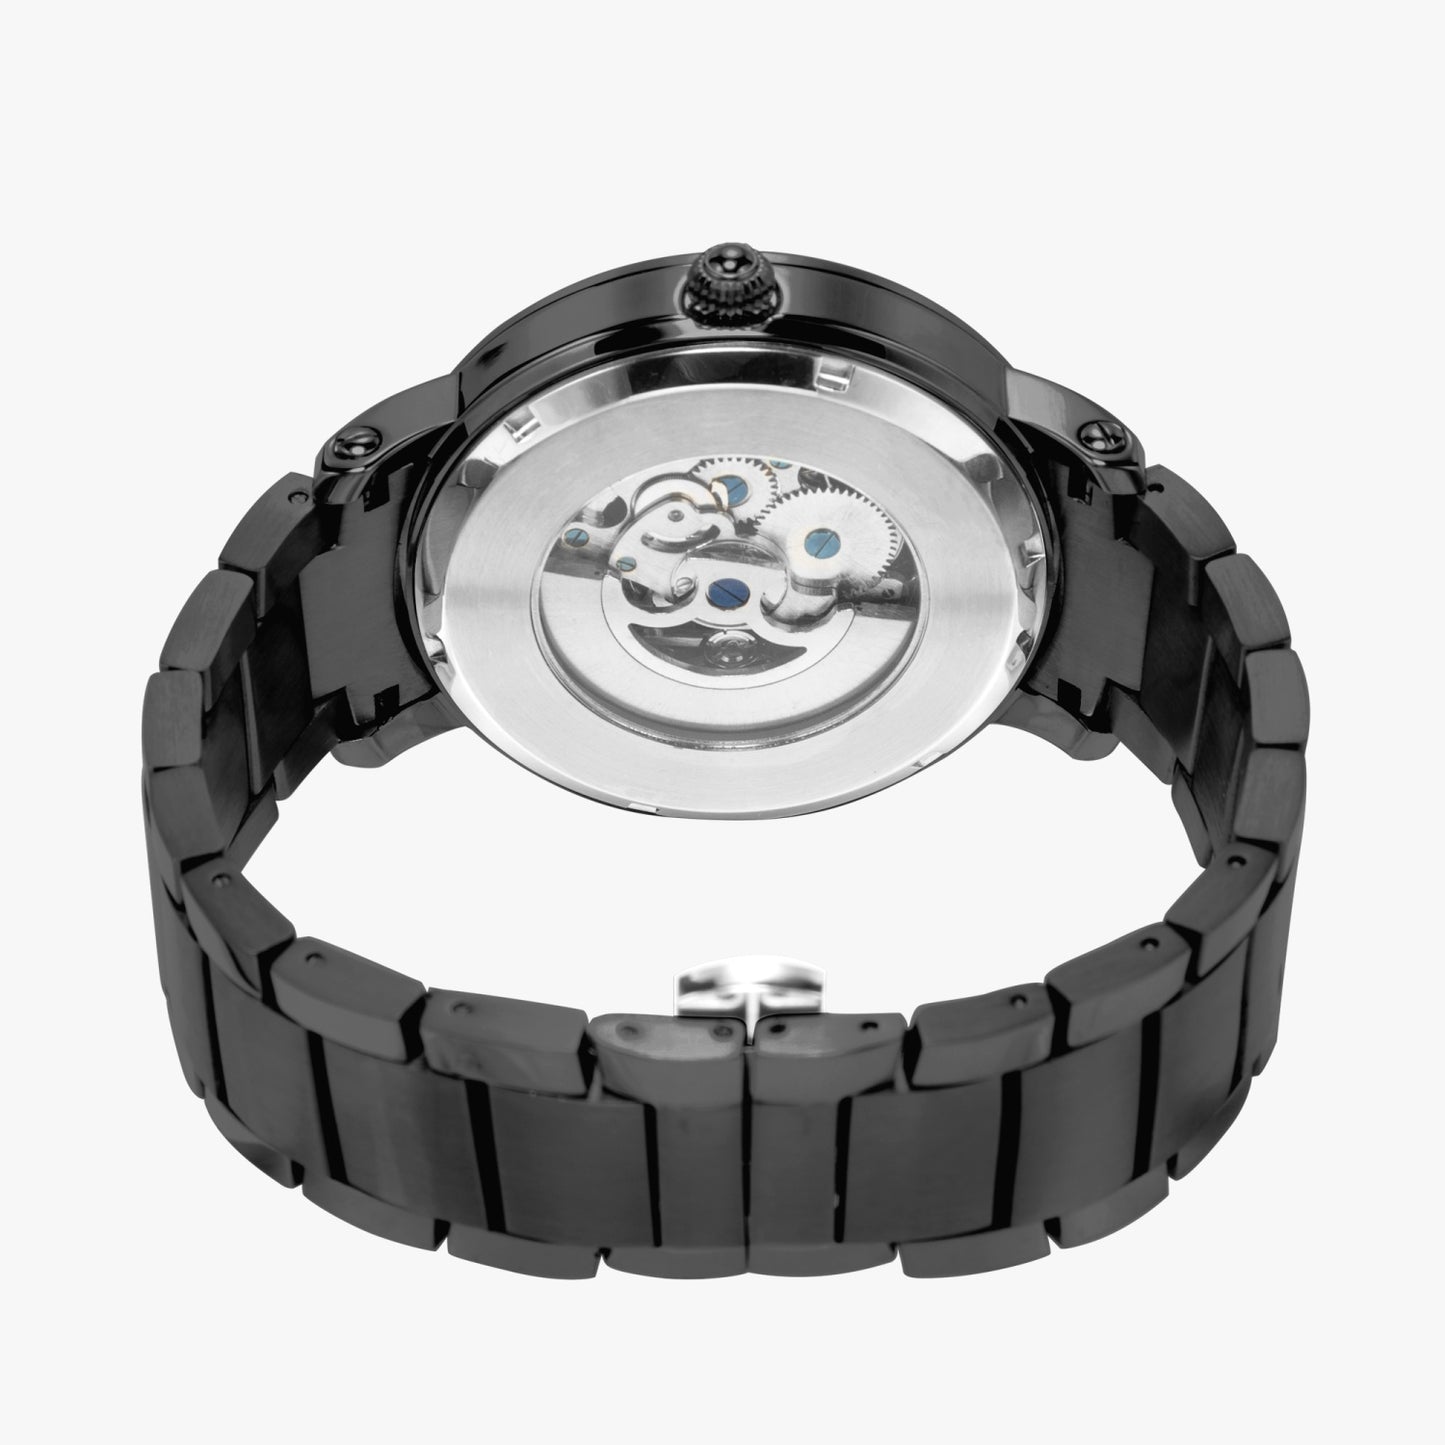 Bari Italia Automatic Movement Watch - Premium Stainless Steel